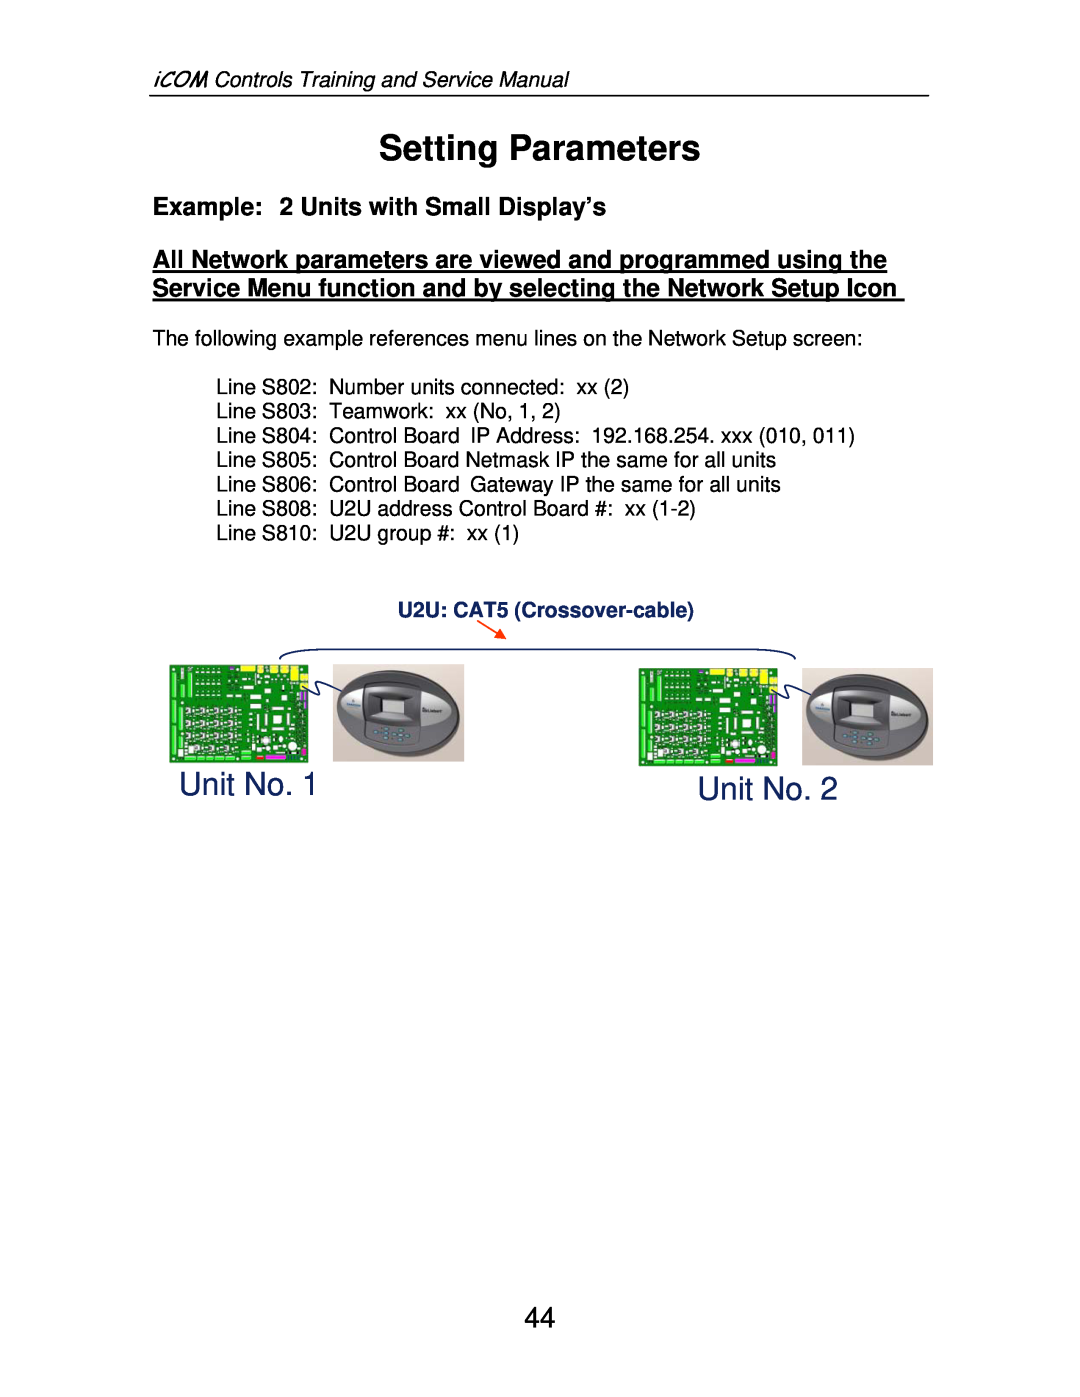 Liebert TM-10098 Setting Parameters, Unit No, iCOM Controls Training and Service Manual, U2U: CAT5 Crossover-cable 